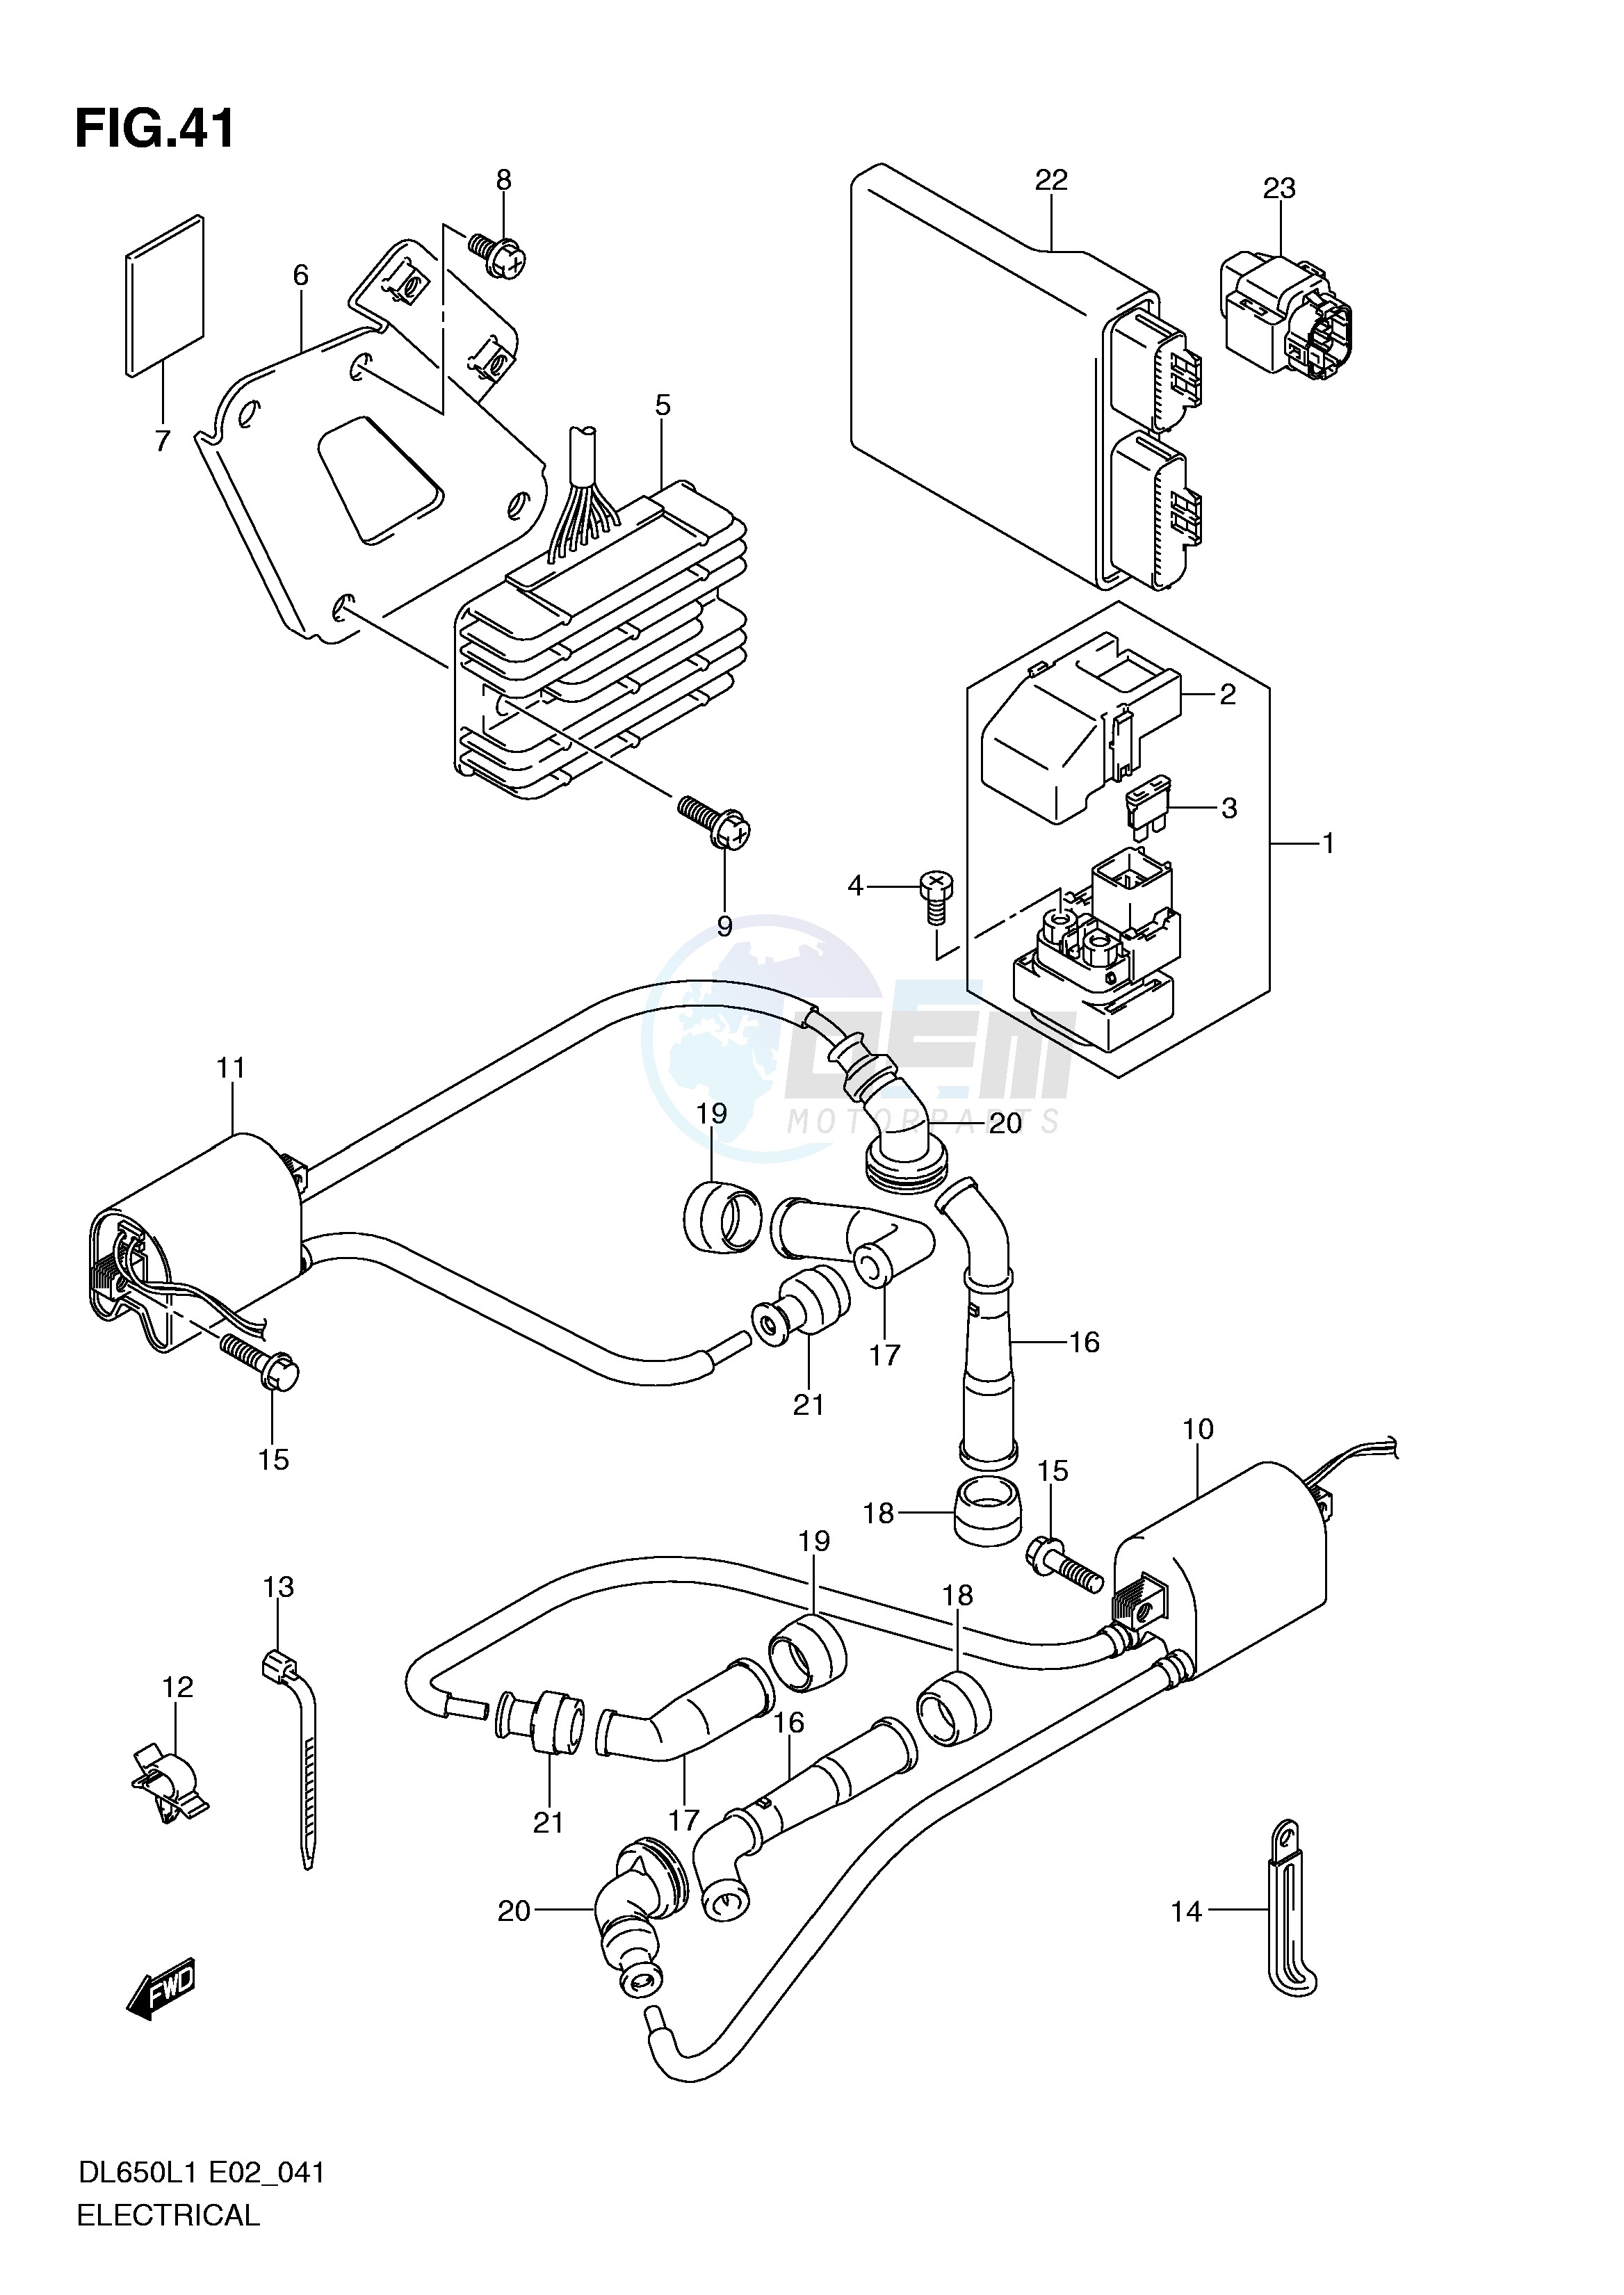 ELECTRICAL (DL650UEL1 E19) blueprint